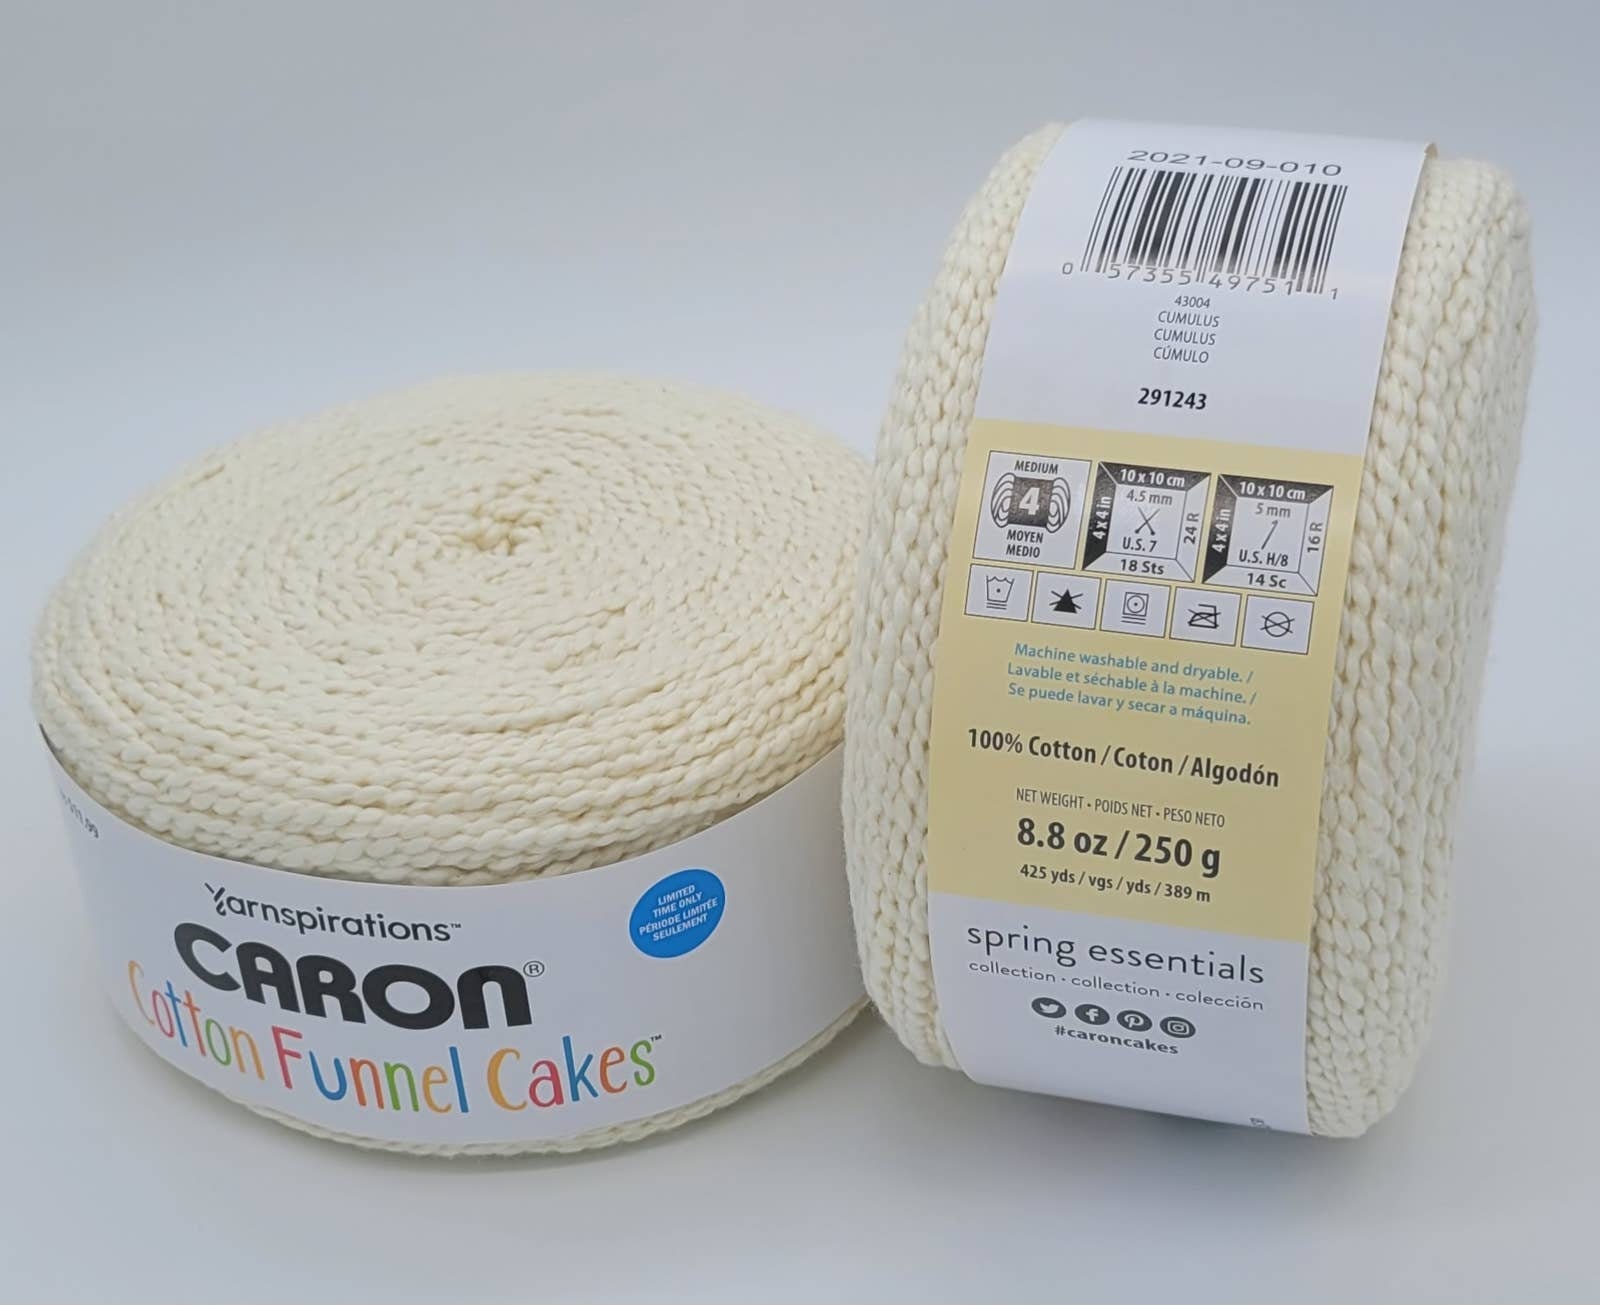 Caron Cotton Angel Cakes Yarn (250g/8.8oz) - Clearance Shades